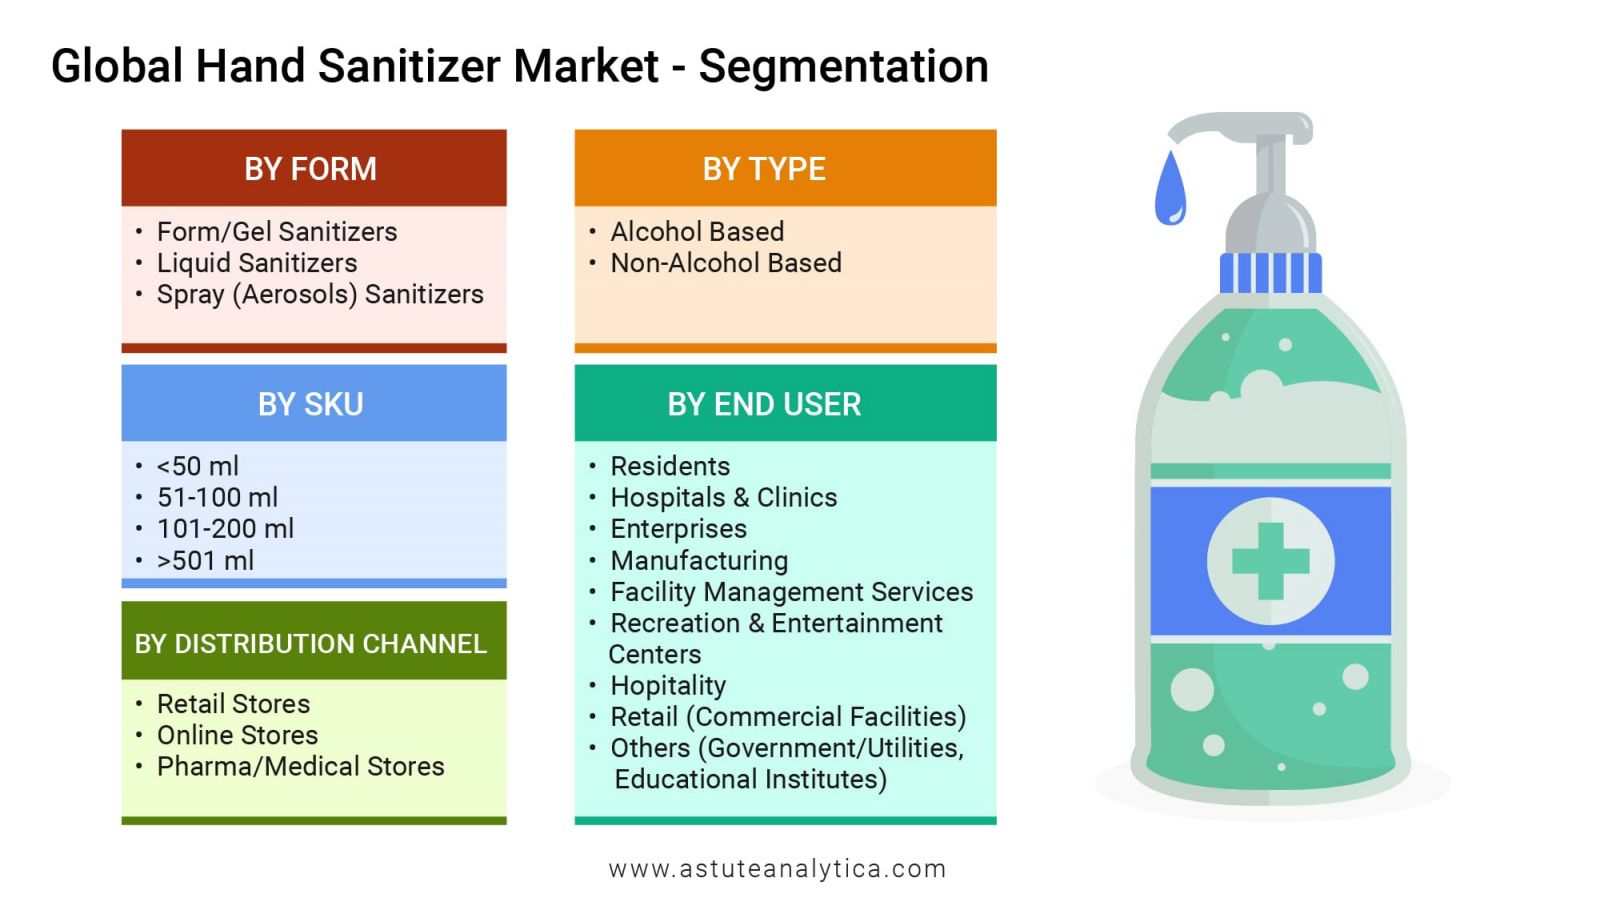 Global hand sanitizer market segmentation